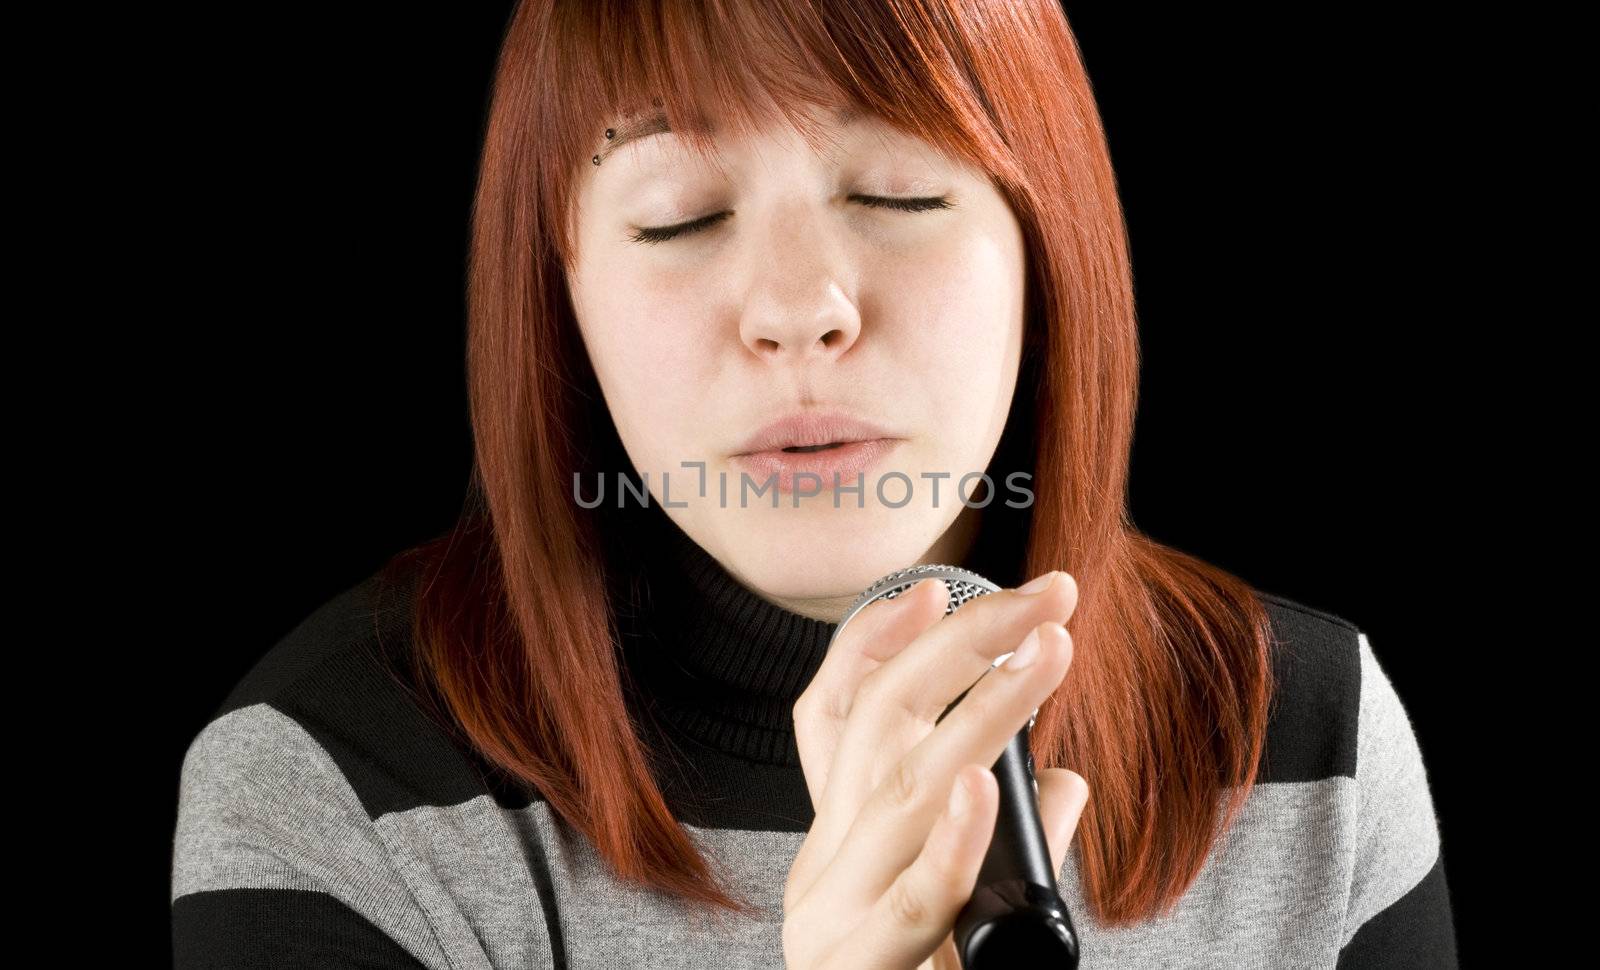 Redhead girl singing karaoke with a microphone. Sweet face.

Studio shot.